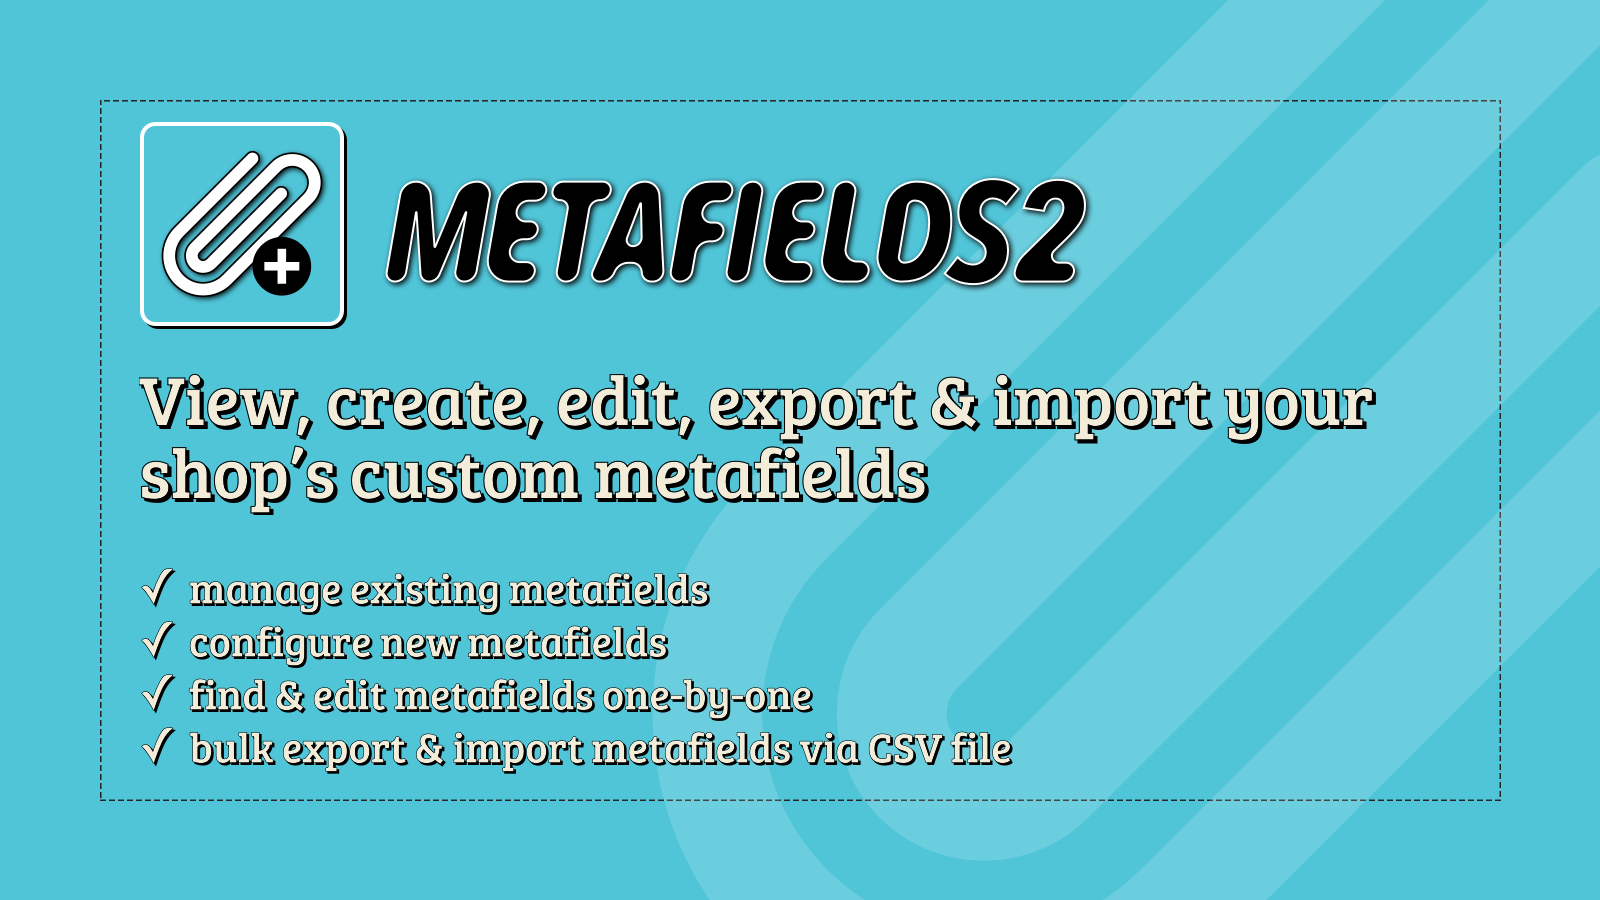 Metafields2 - Create, edit, export/import your custom metafields